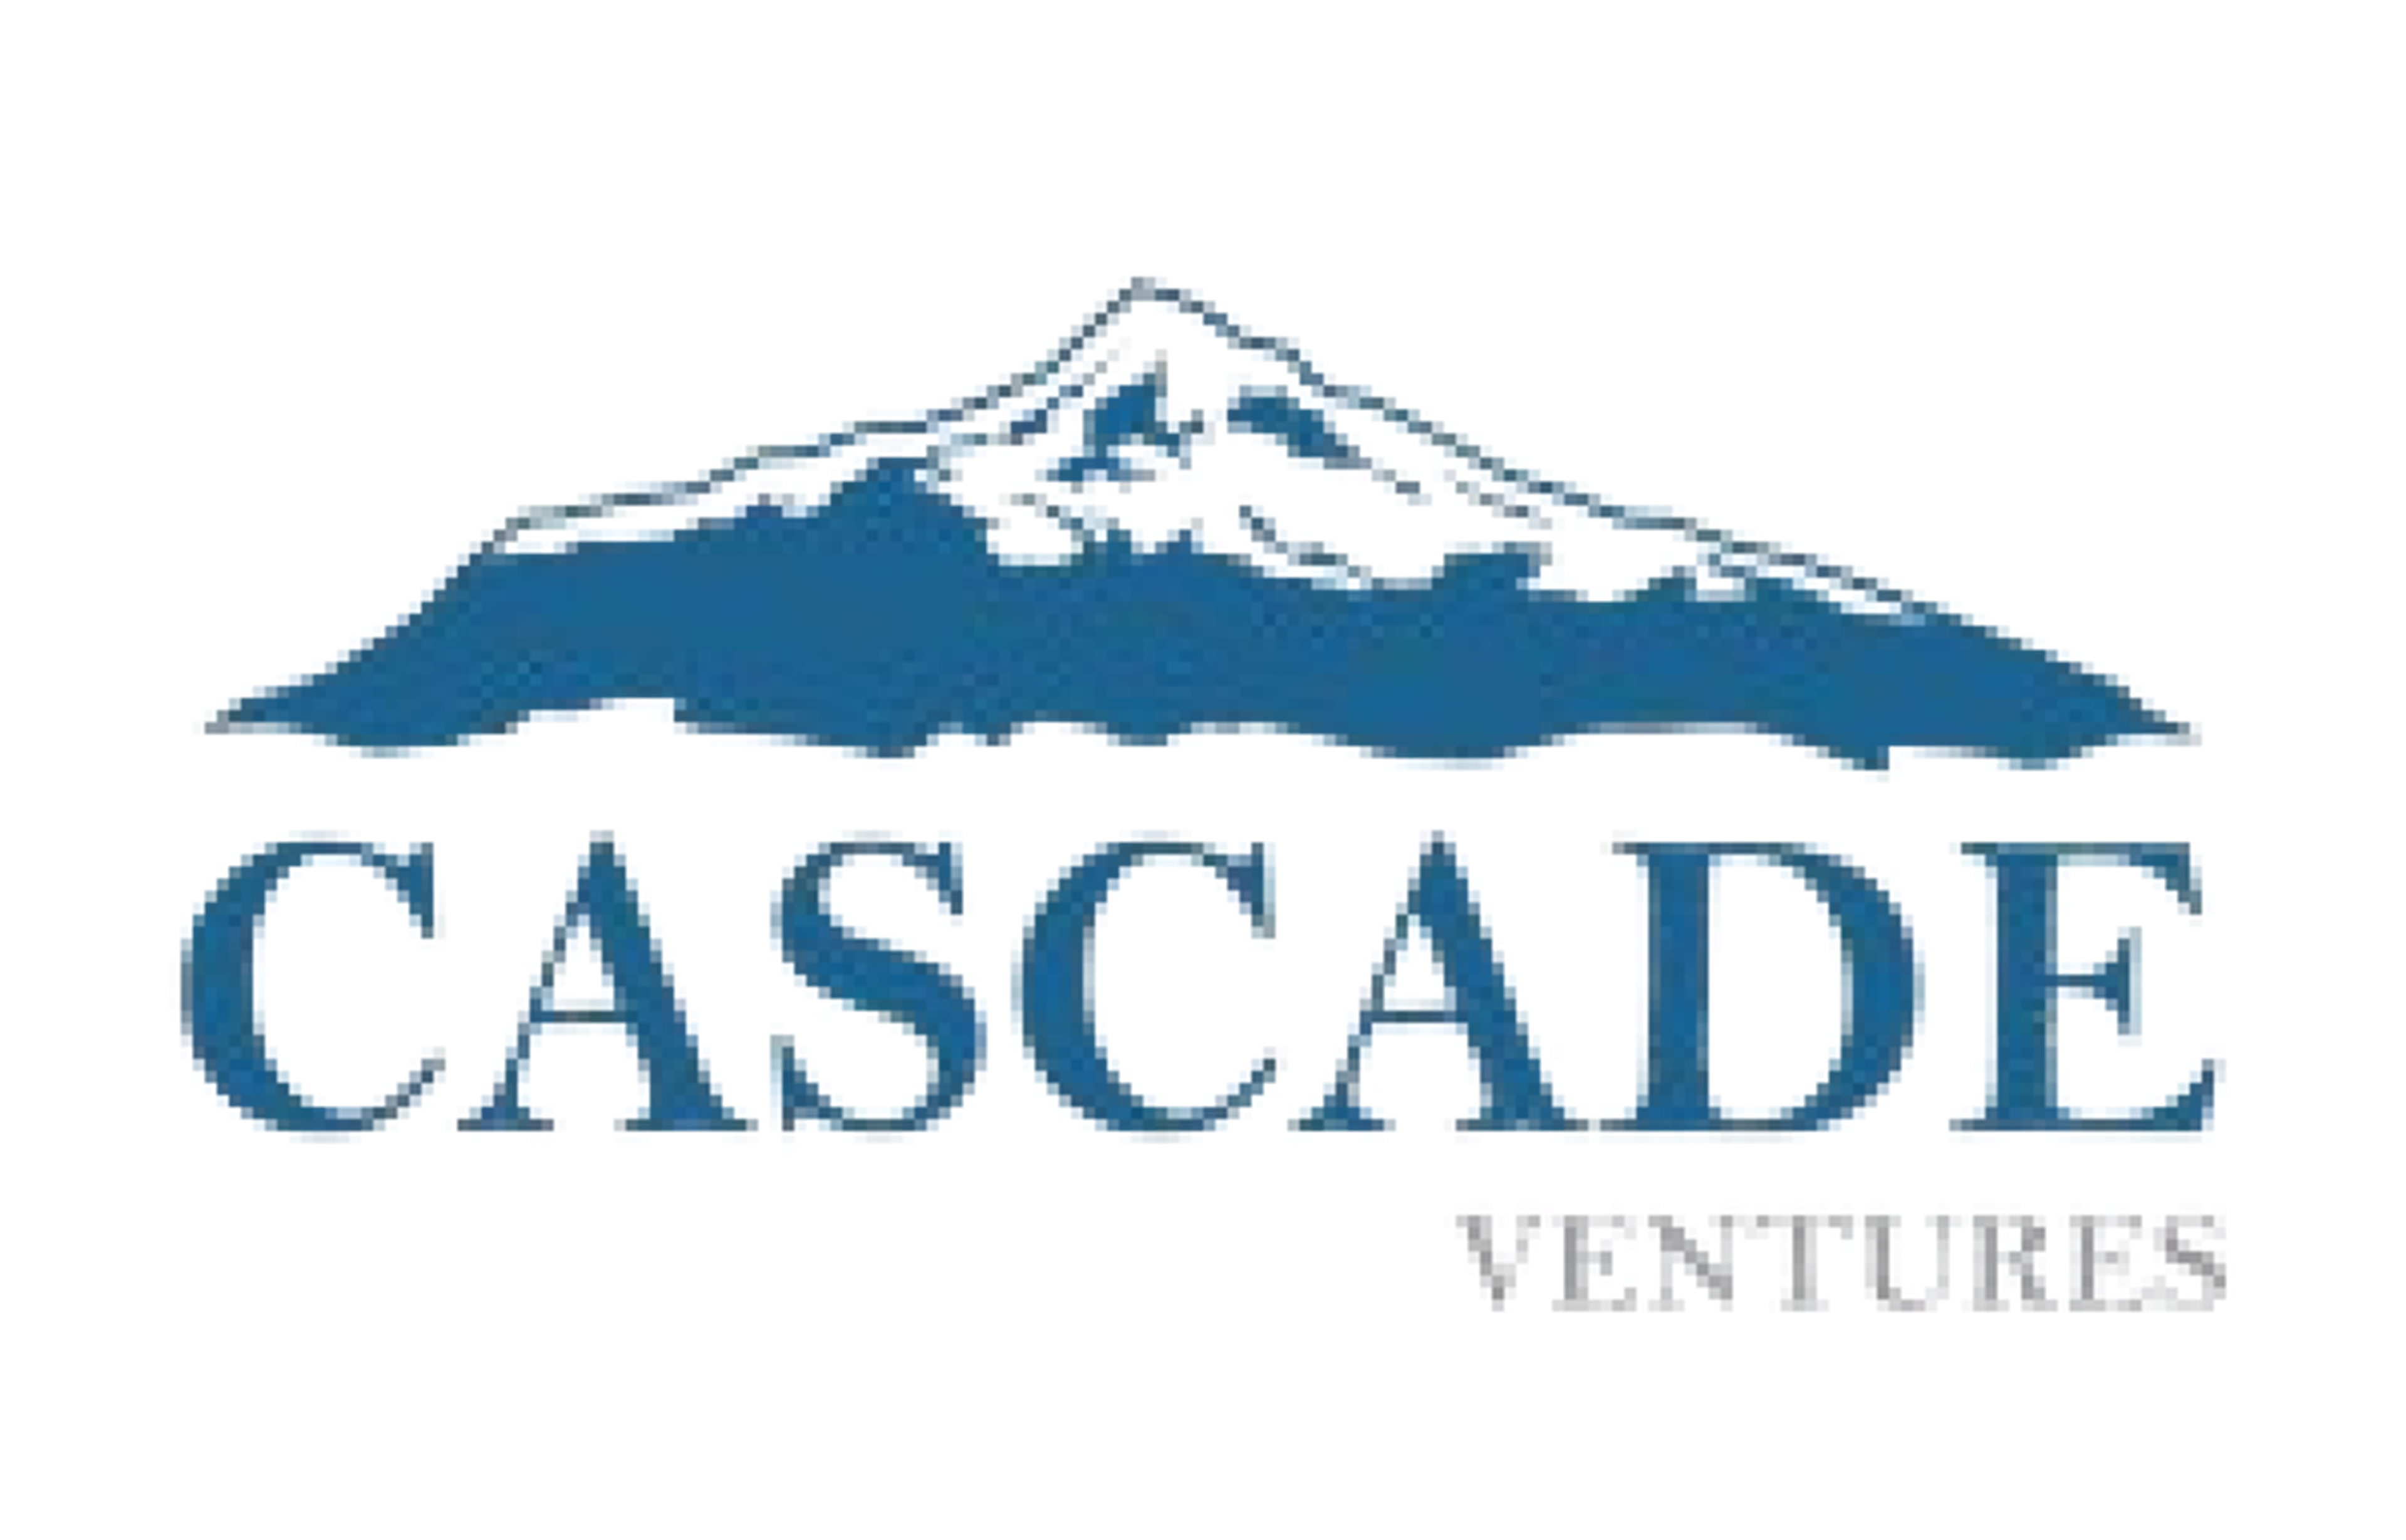 Cascade Ventures